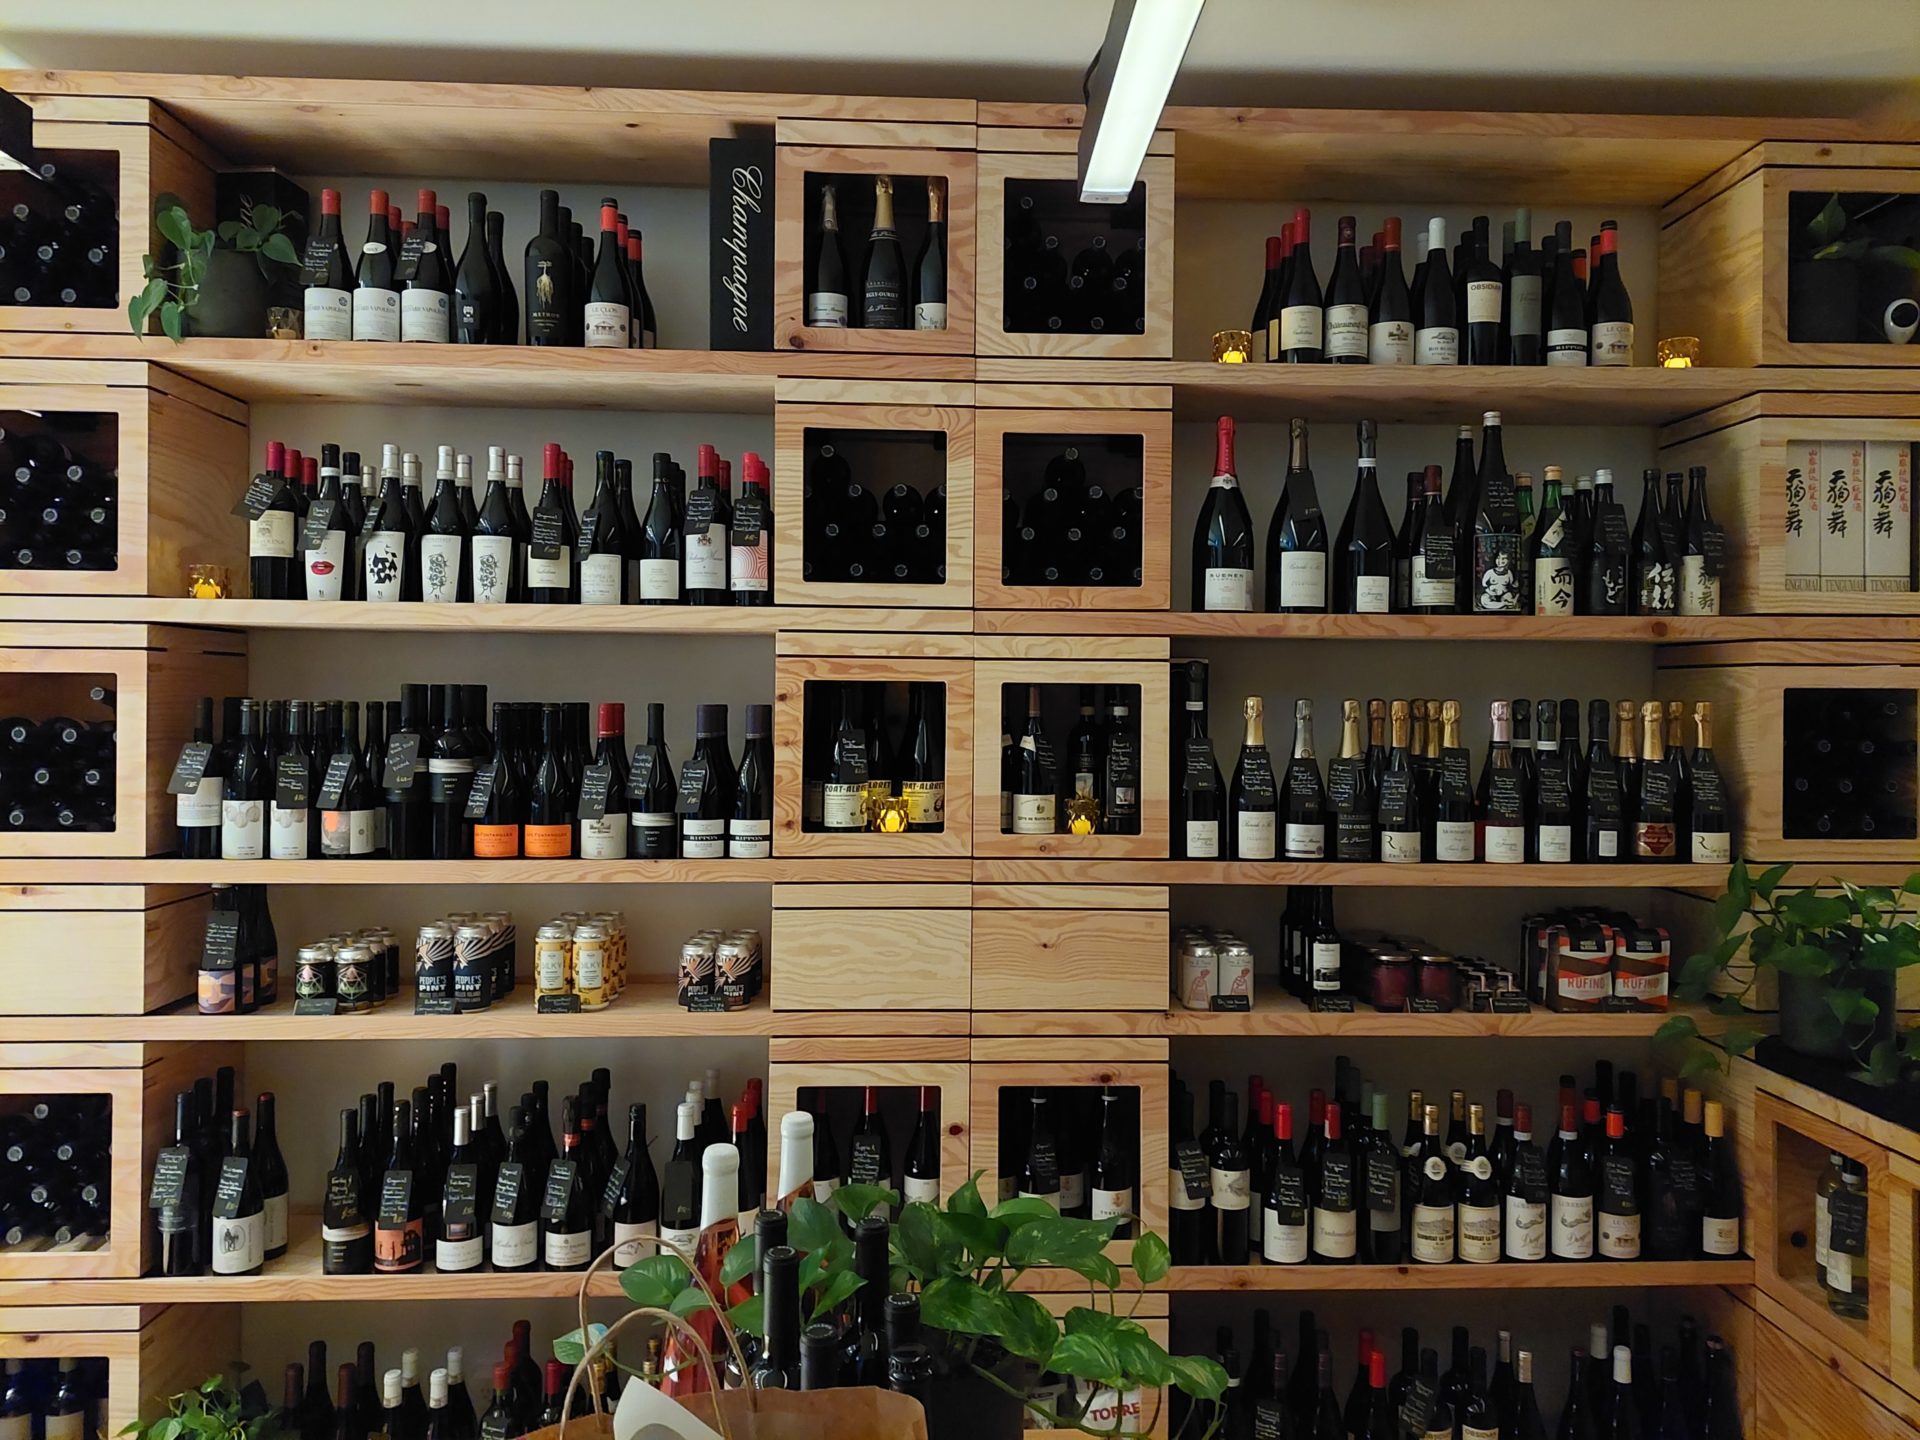 Loop Line Wine And Food: Dupont’s New Wine Bar & Bottle Shop